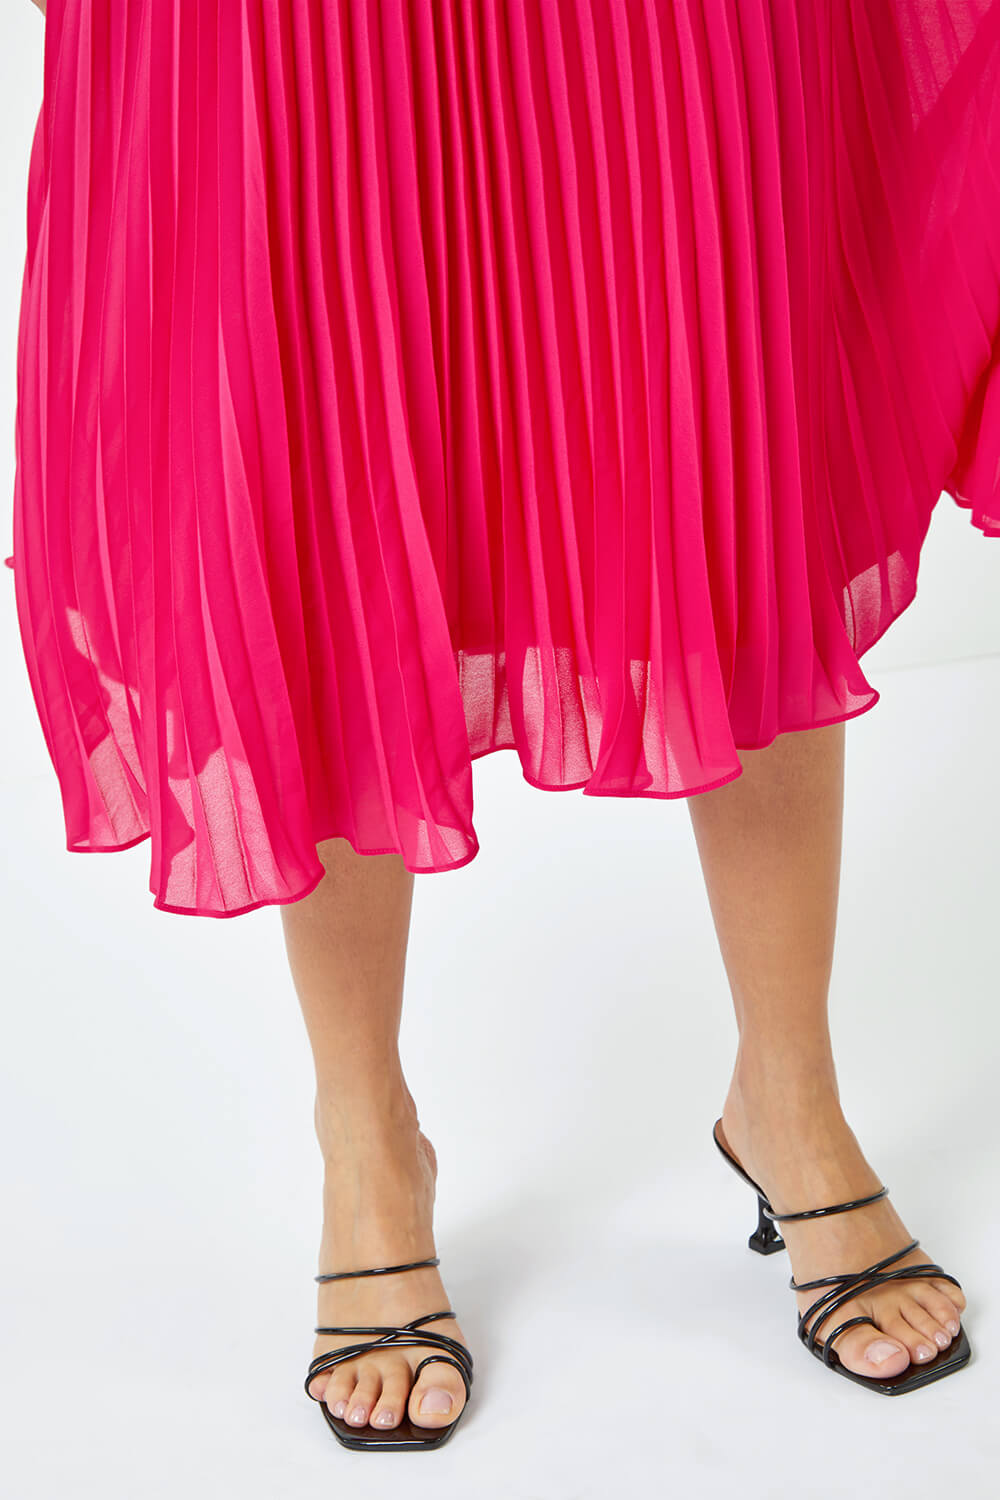 CERISE Lace Top Overlay Pleated Midi Dress, Image 5 of 5